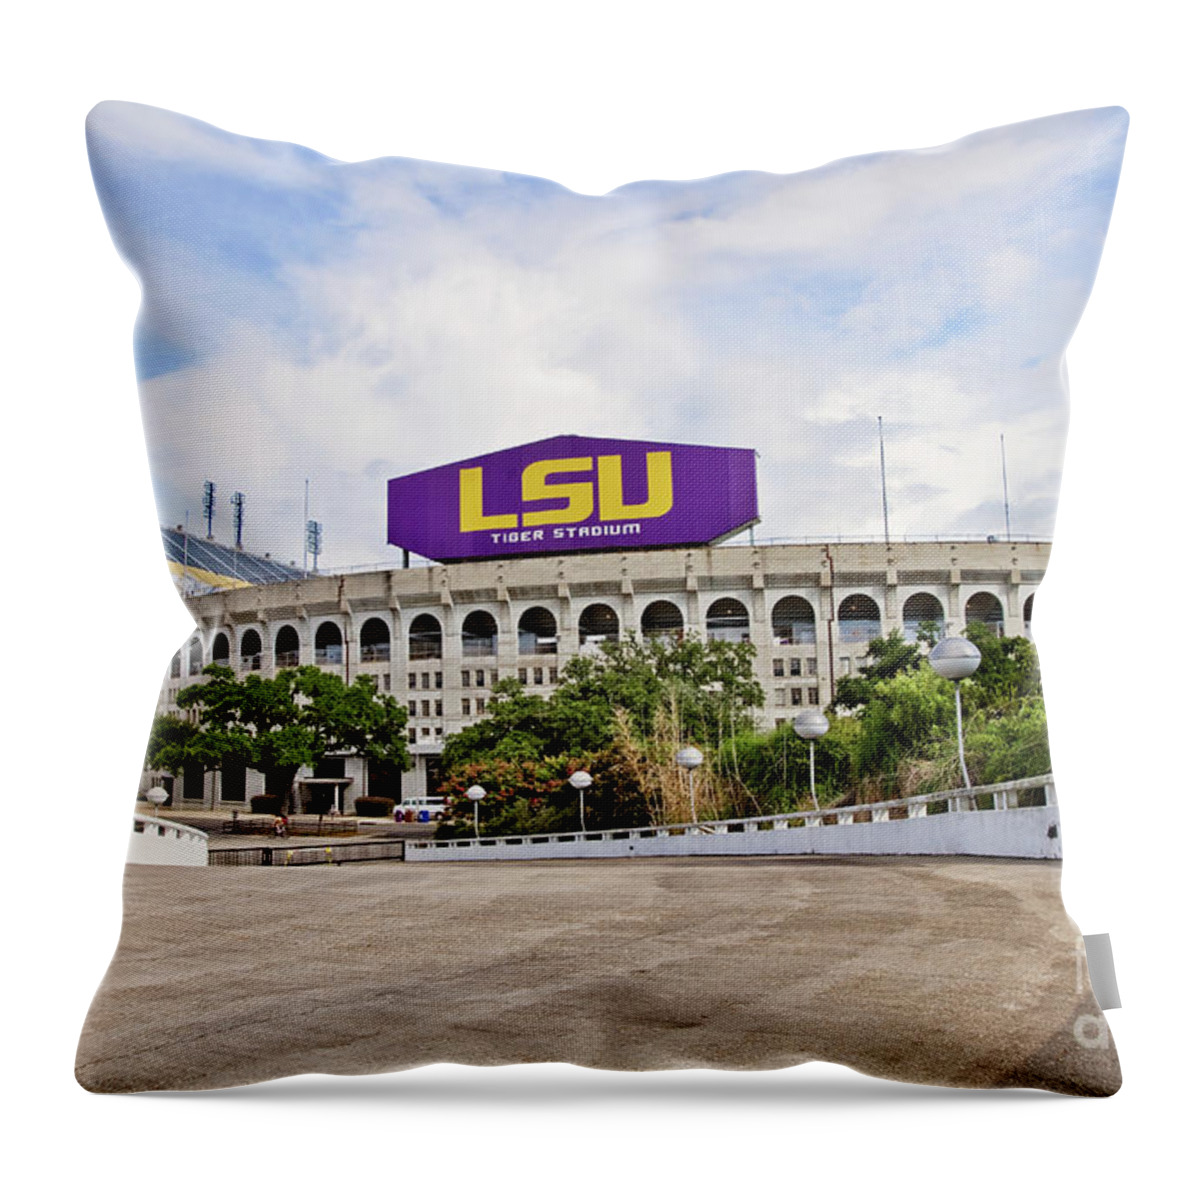 Lsu Throw Pillow featuring the photograph LSU Tiger Stadium by Scott Pellegrin